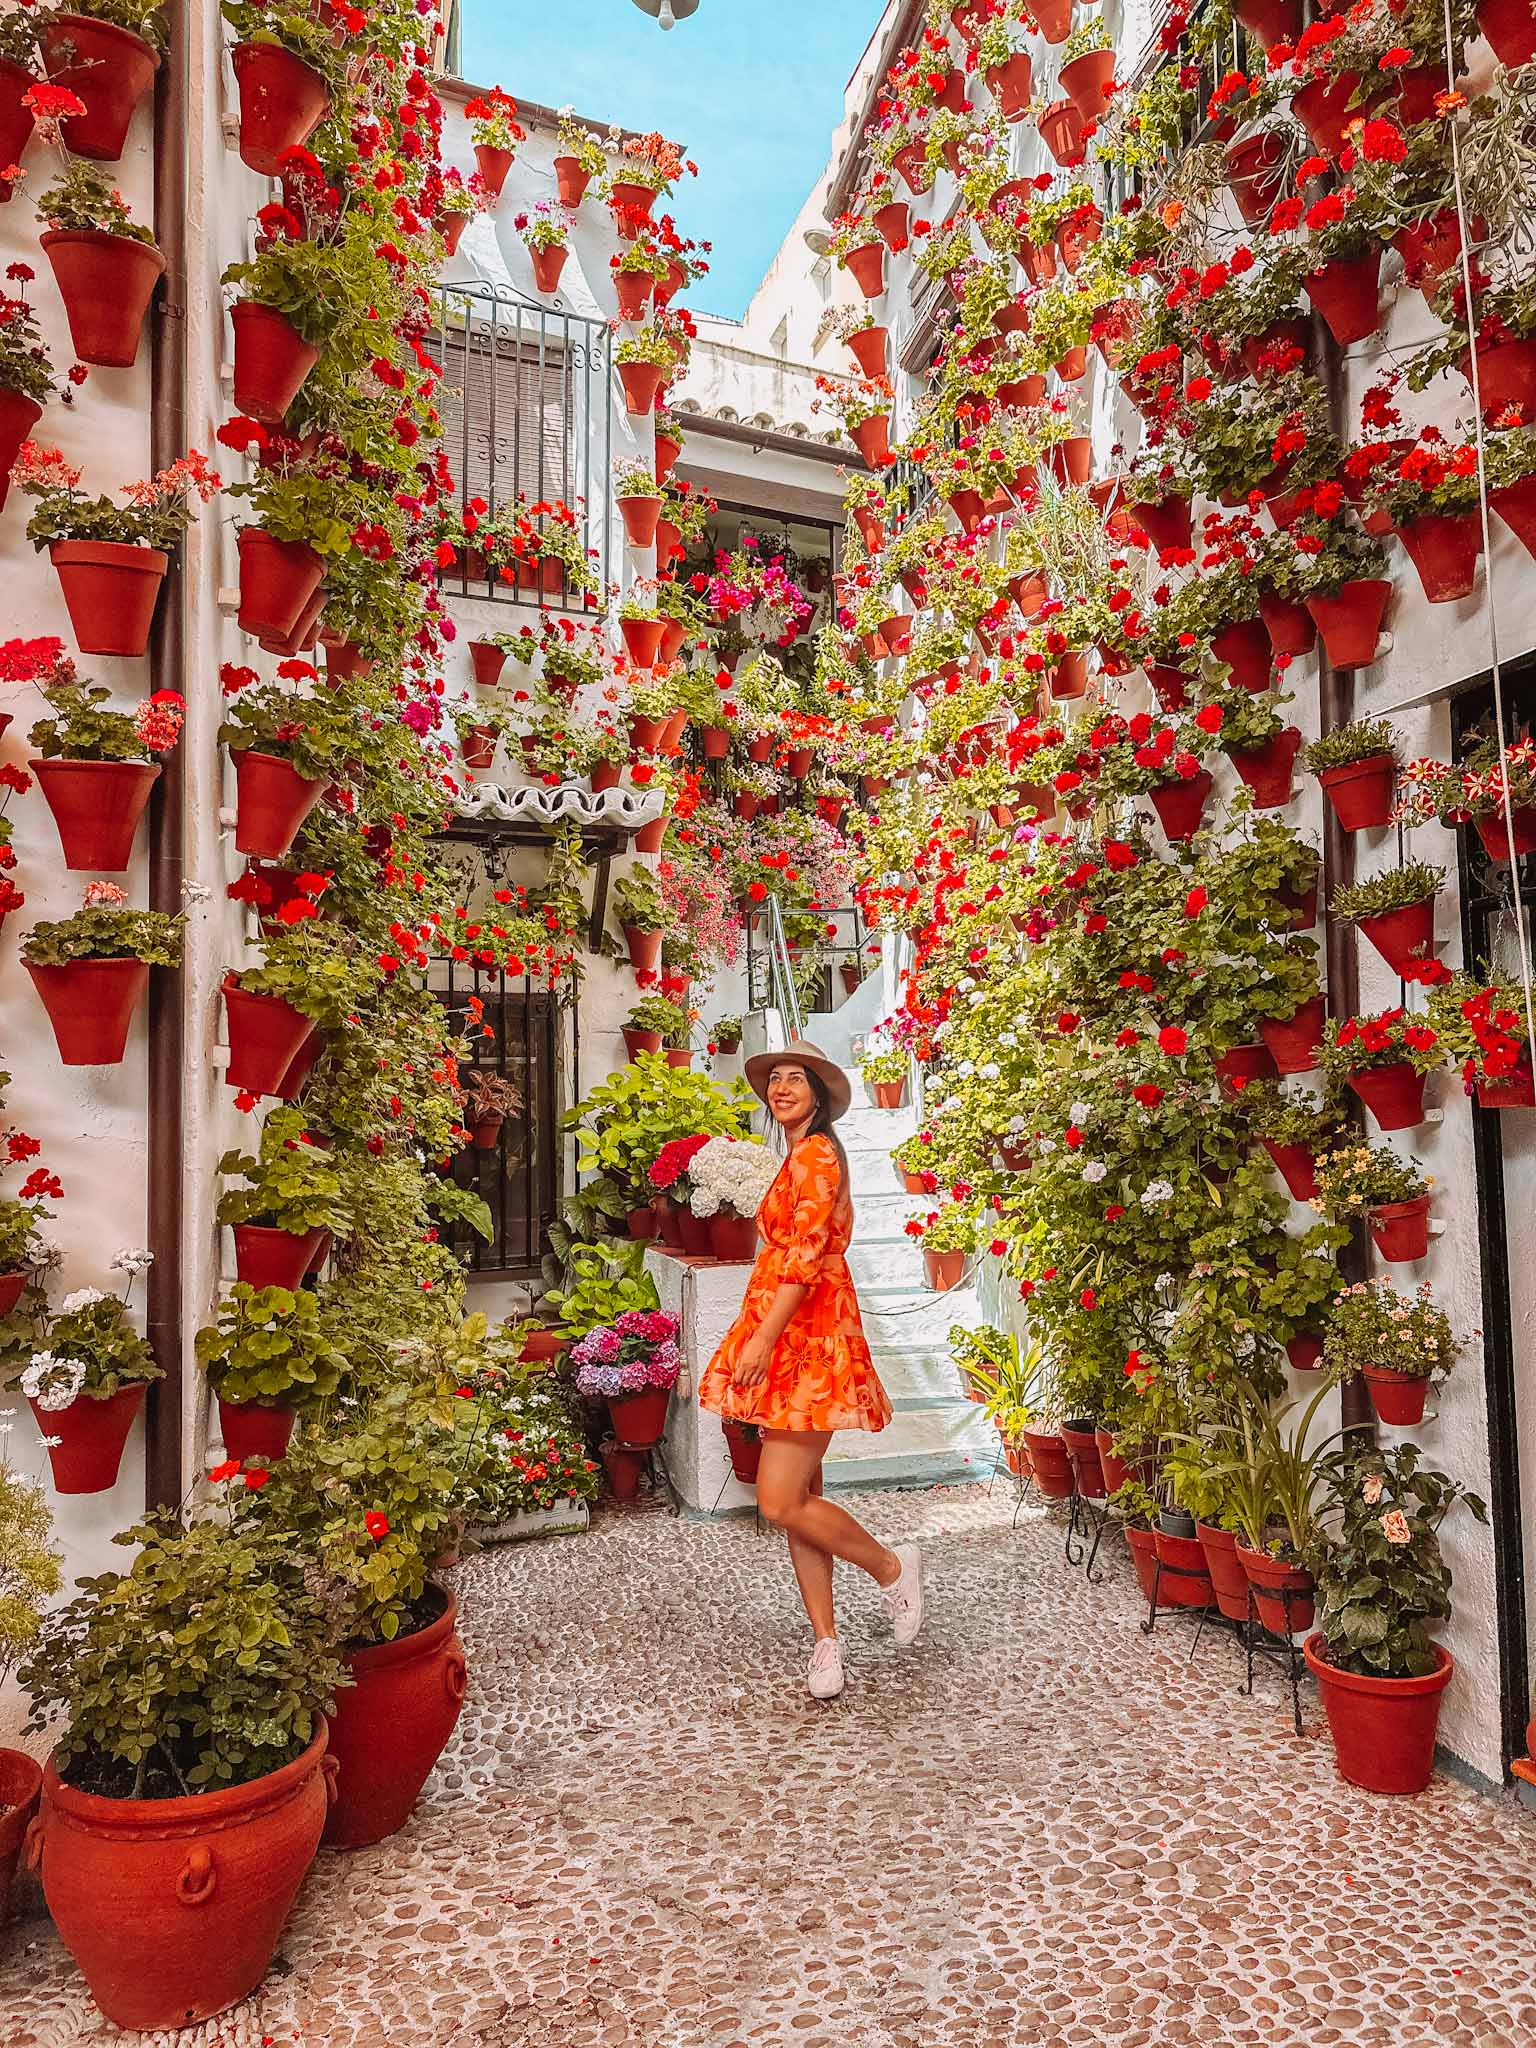 Ruta de los Patios de Cordoba - best Instagram spots of flower patios in Cordoba, Spain